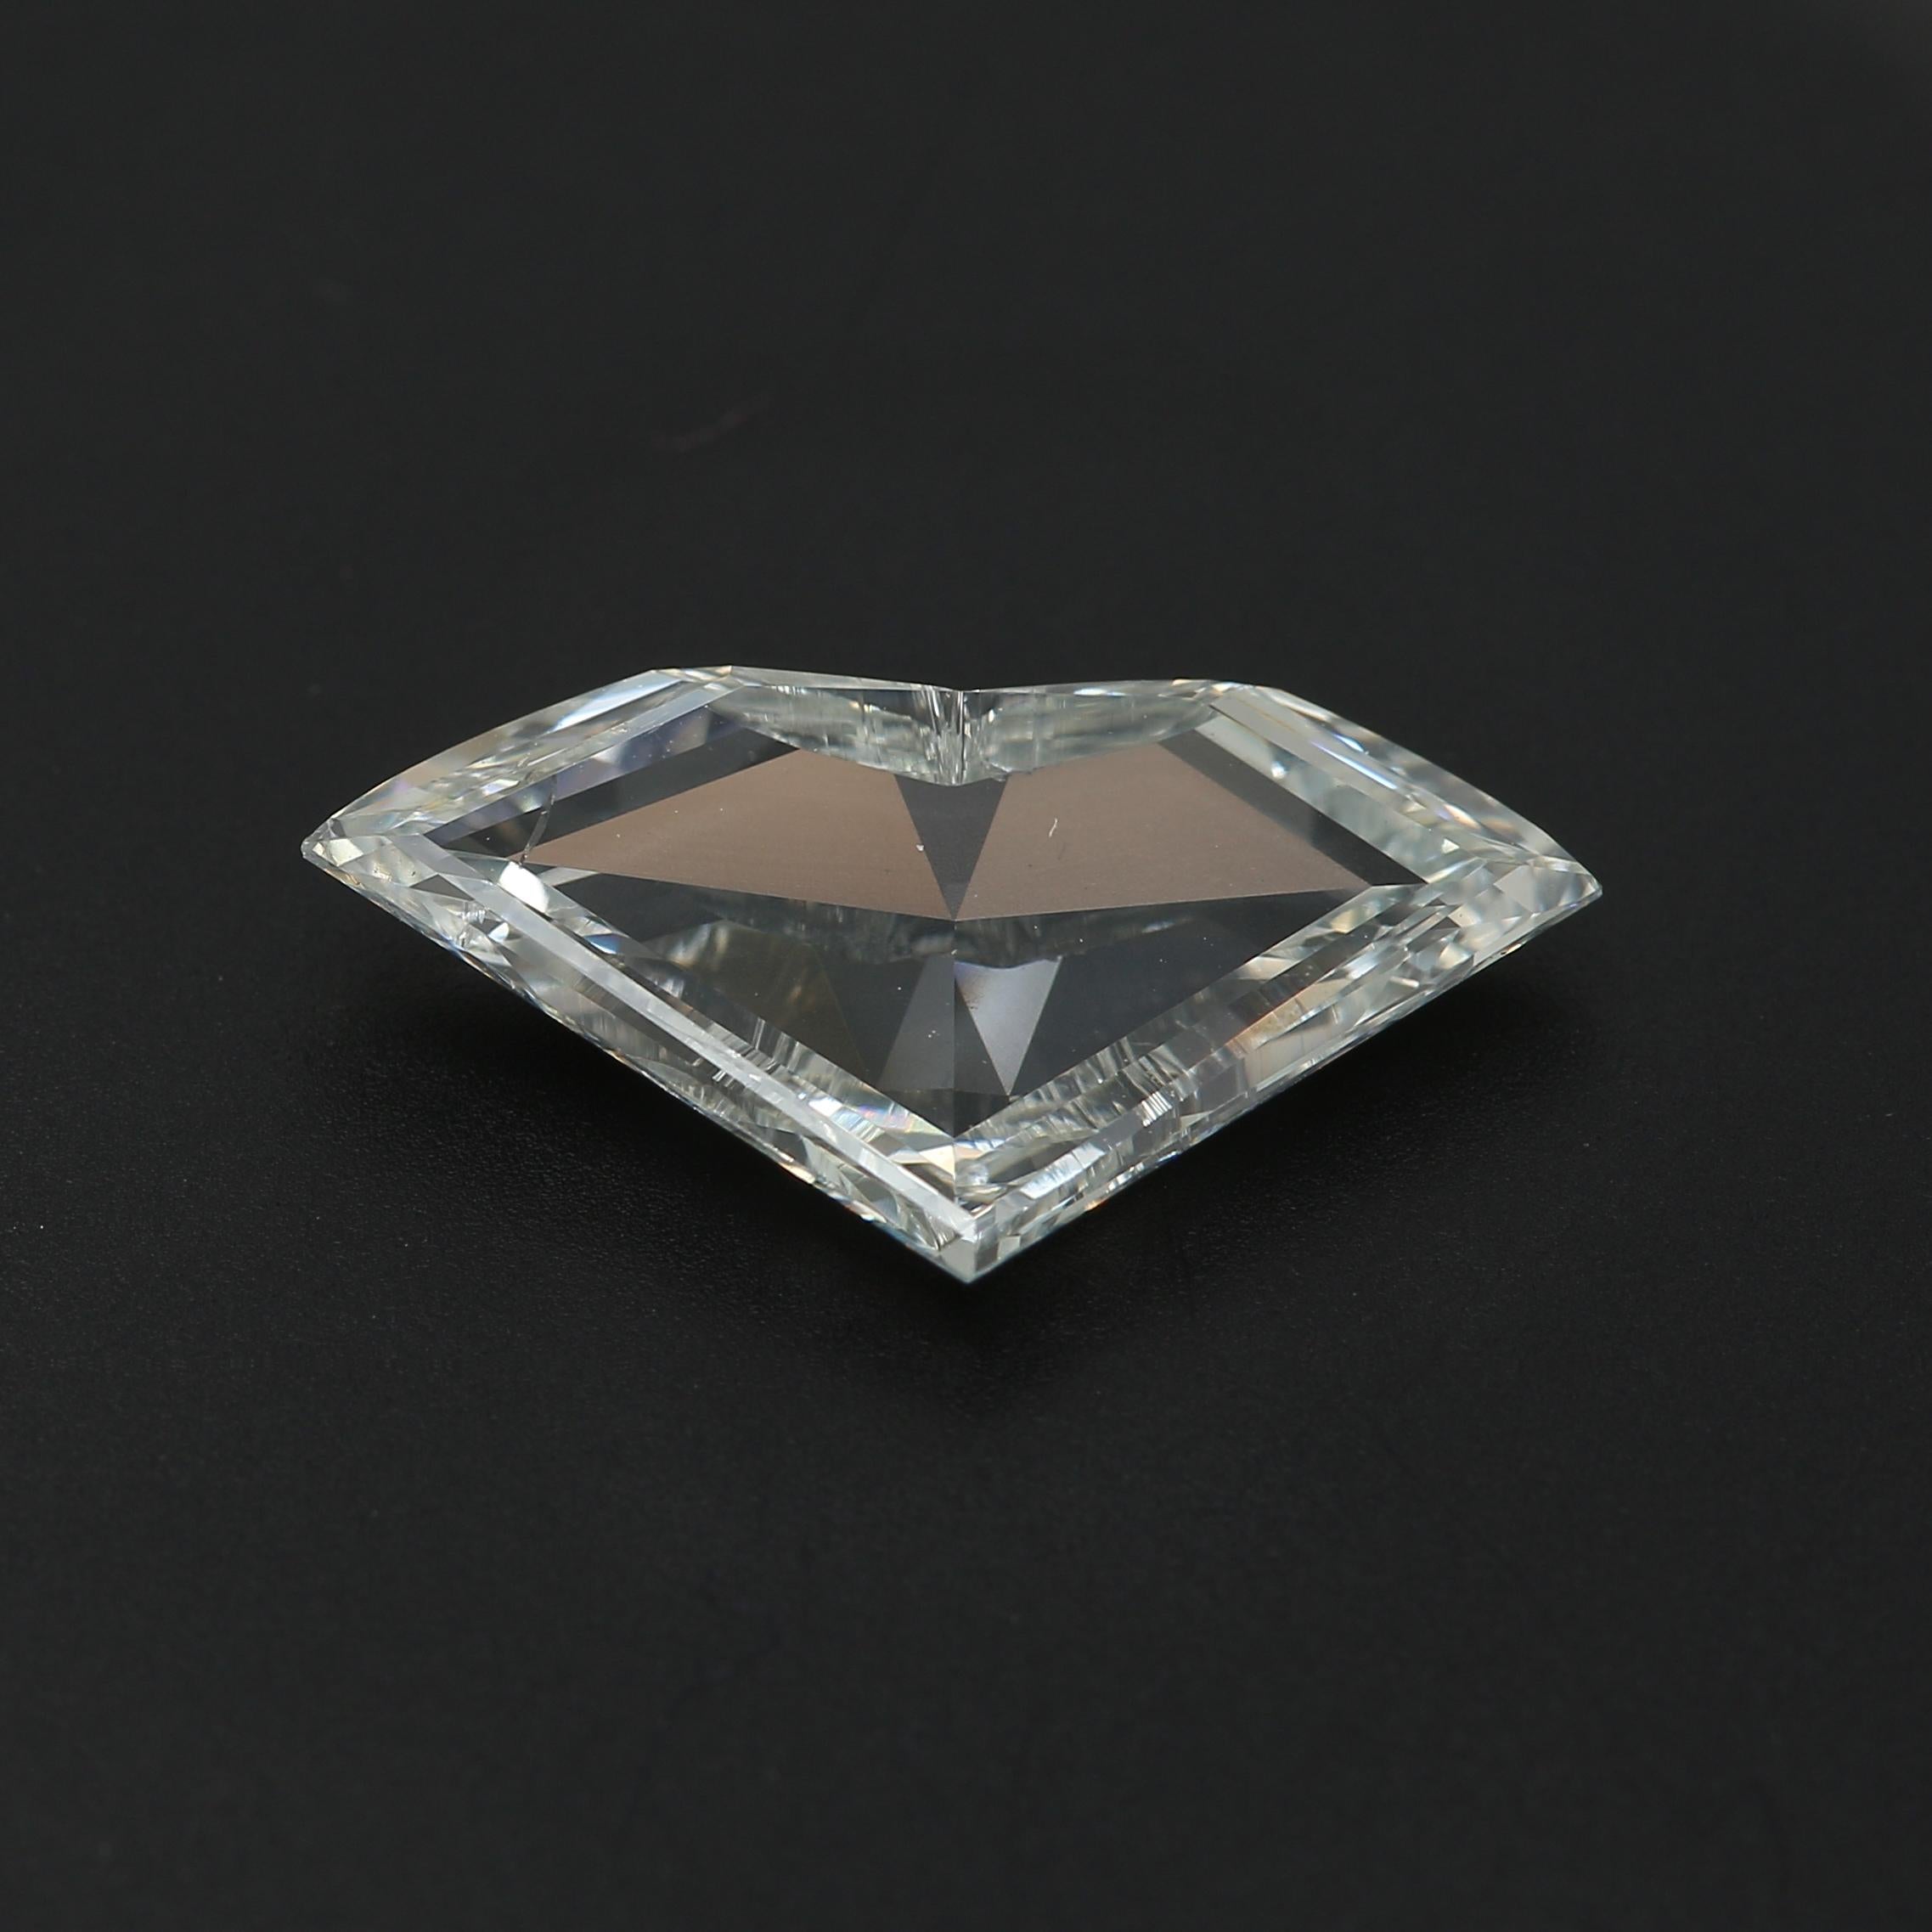 2.24 Carat Shield Cut Diamond I1 Clarity GIA Certified For Sale 2